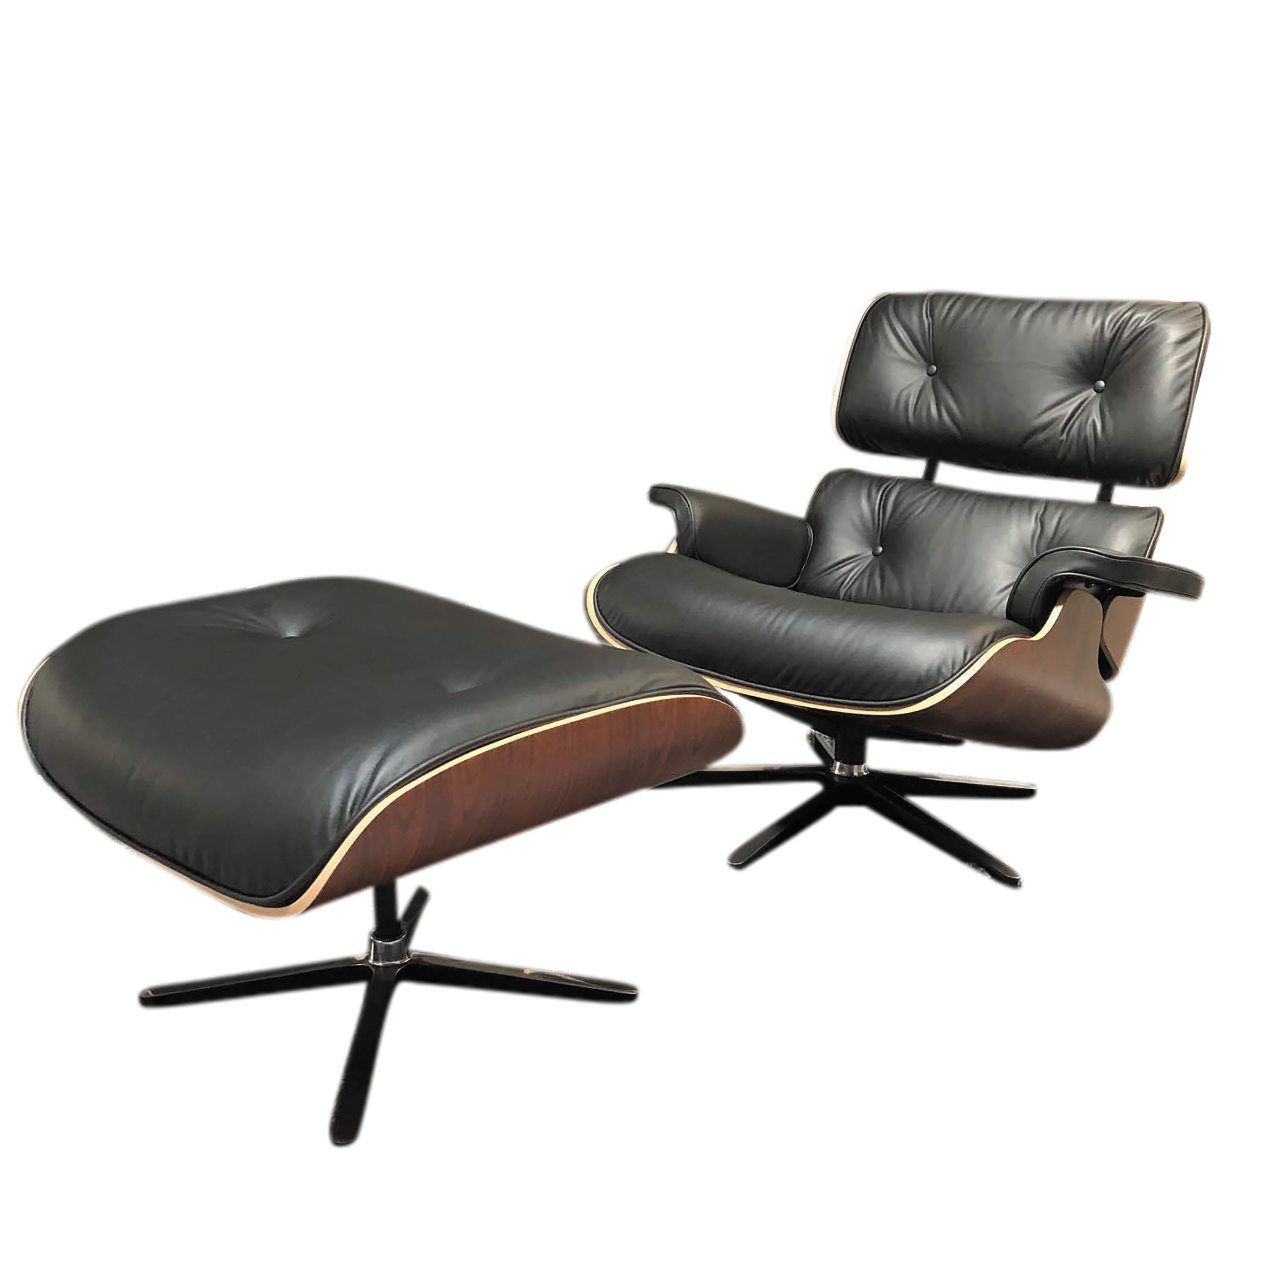 04_Charles-Eames-lounge-chair